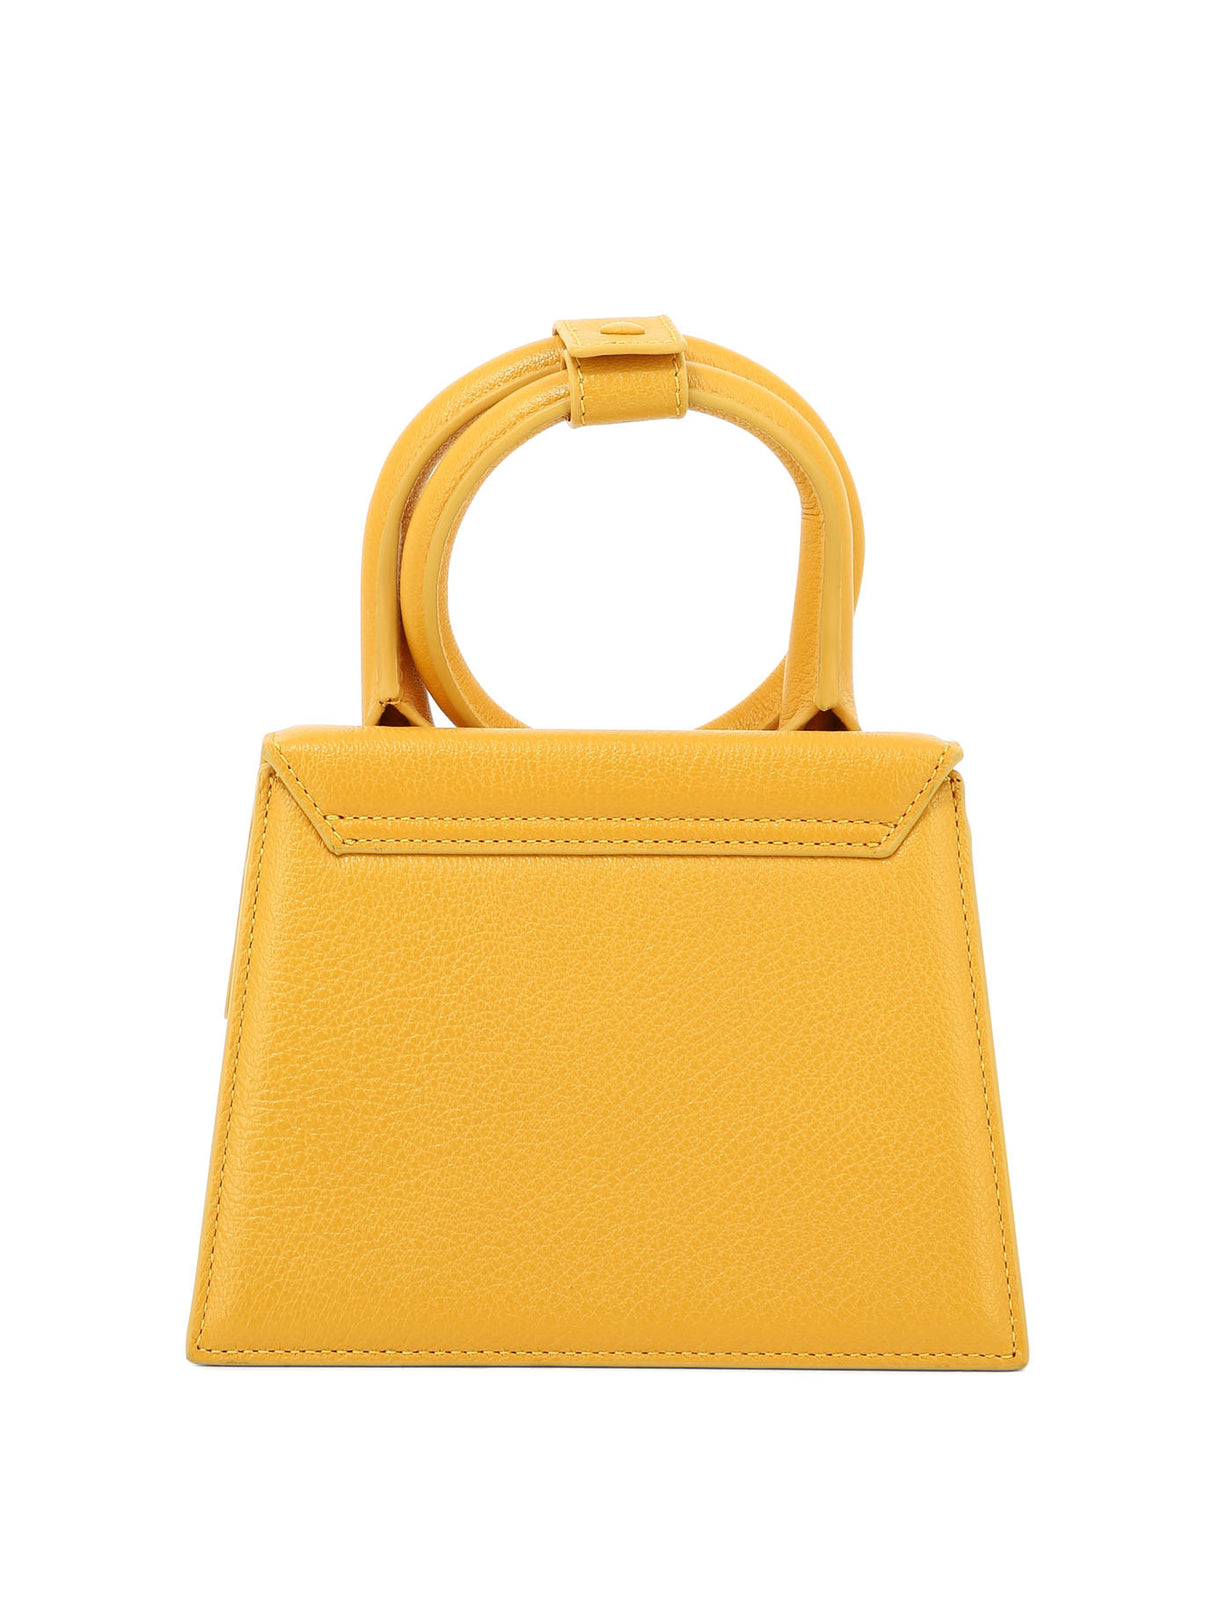 JACQUEMUS Orange Leather Top-Handle Handbag for Women